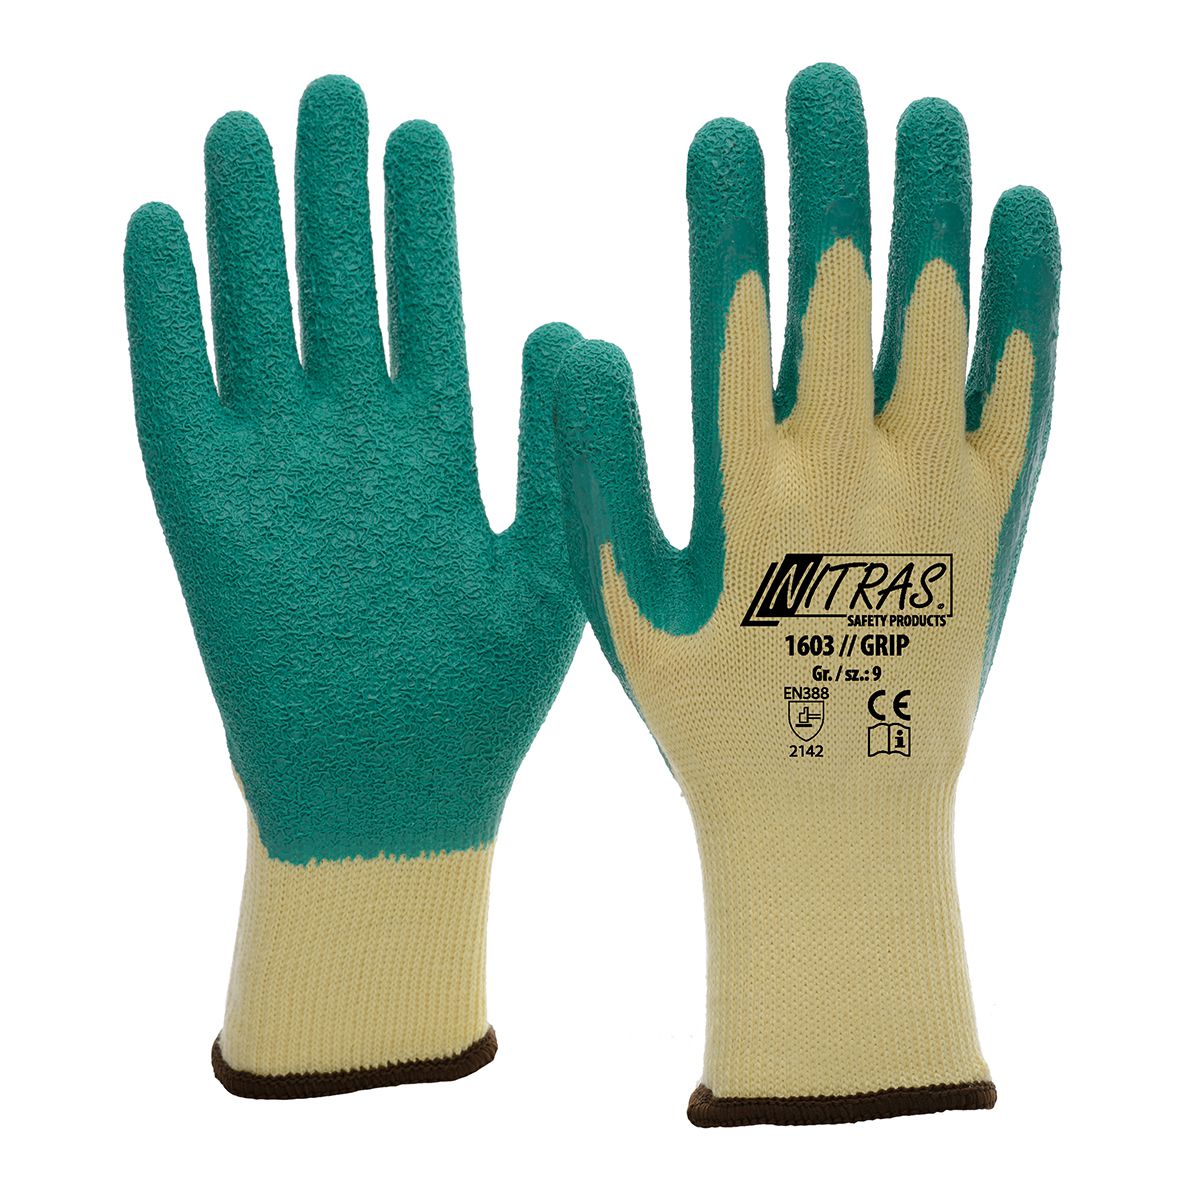 Nitras latex work glove 1603 Grip, EN 388 / EN 420, partly coated, 12 pieces, size 11/2XL